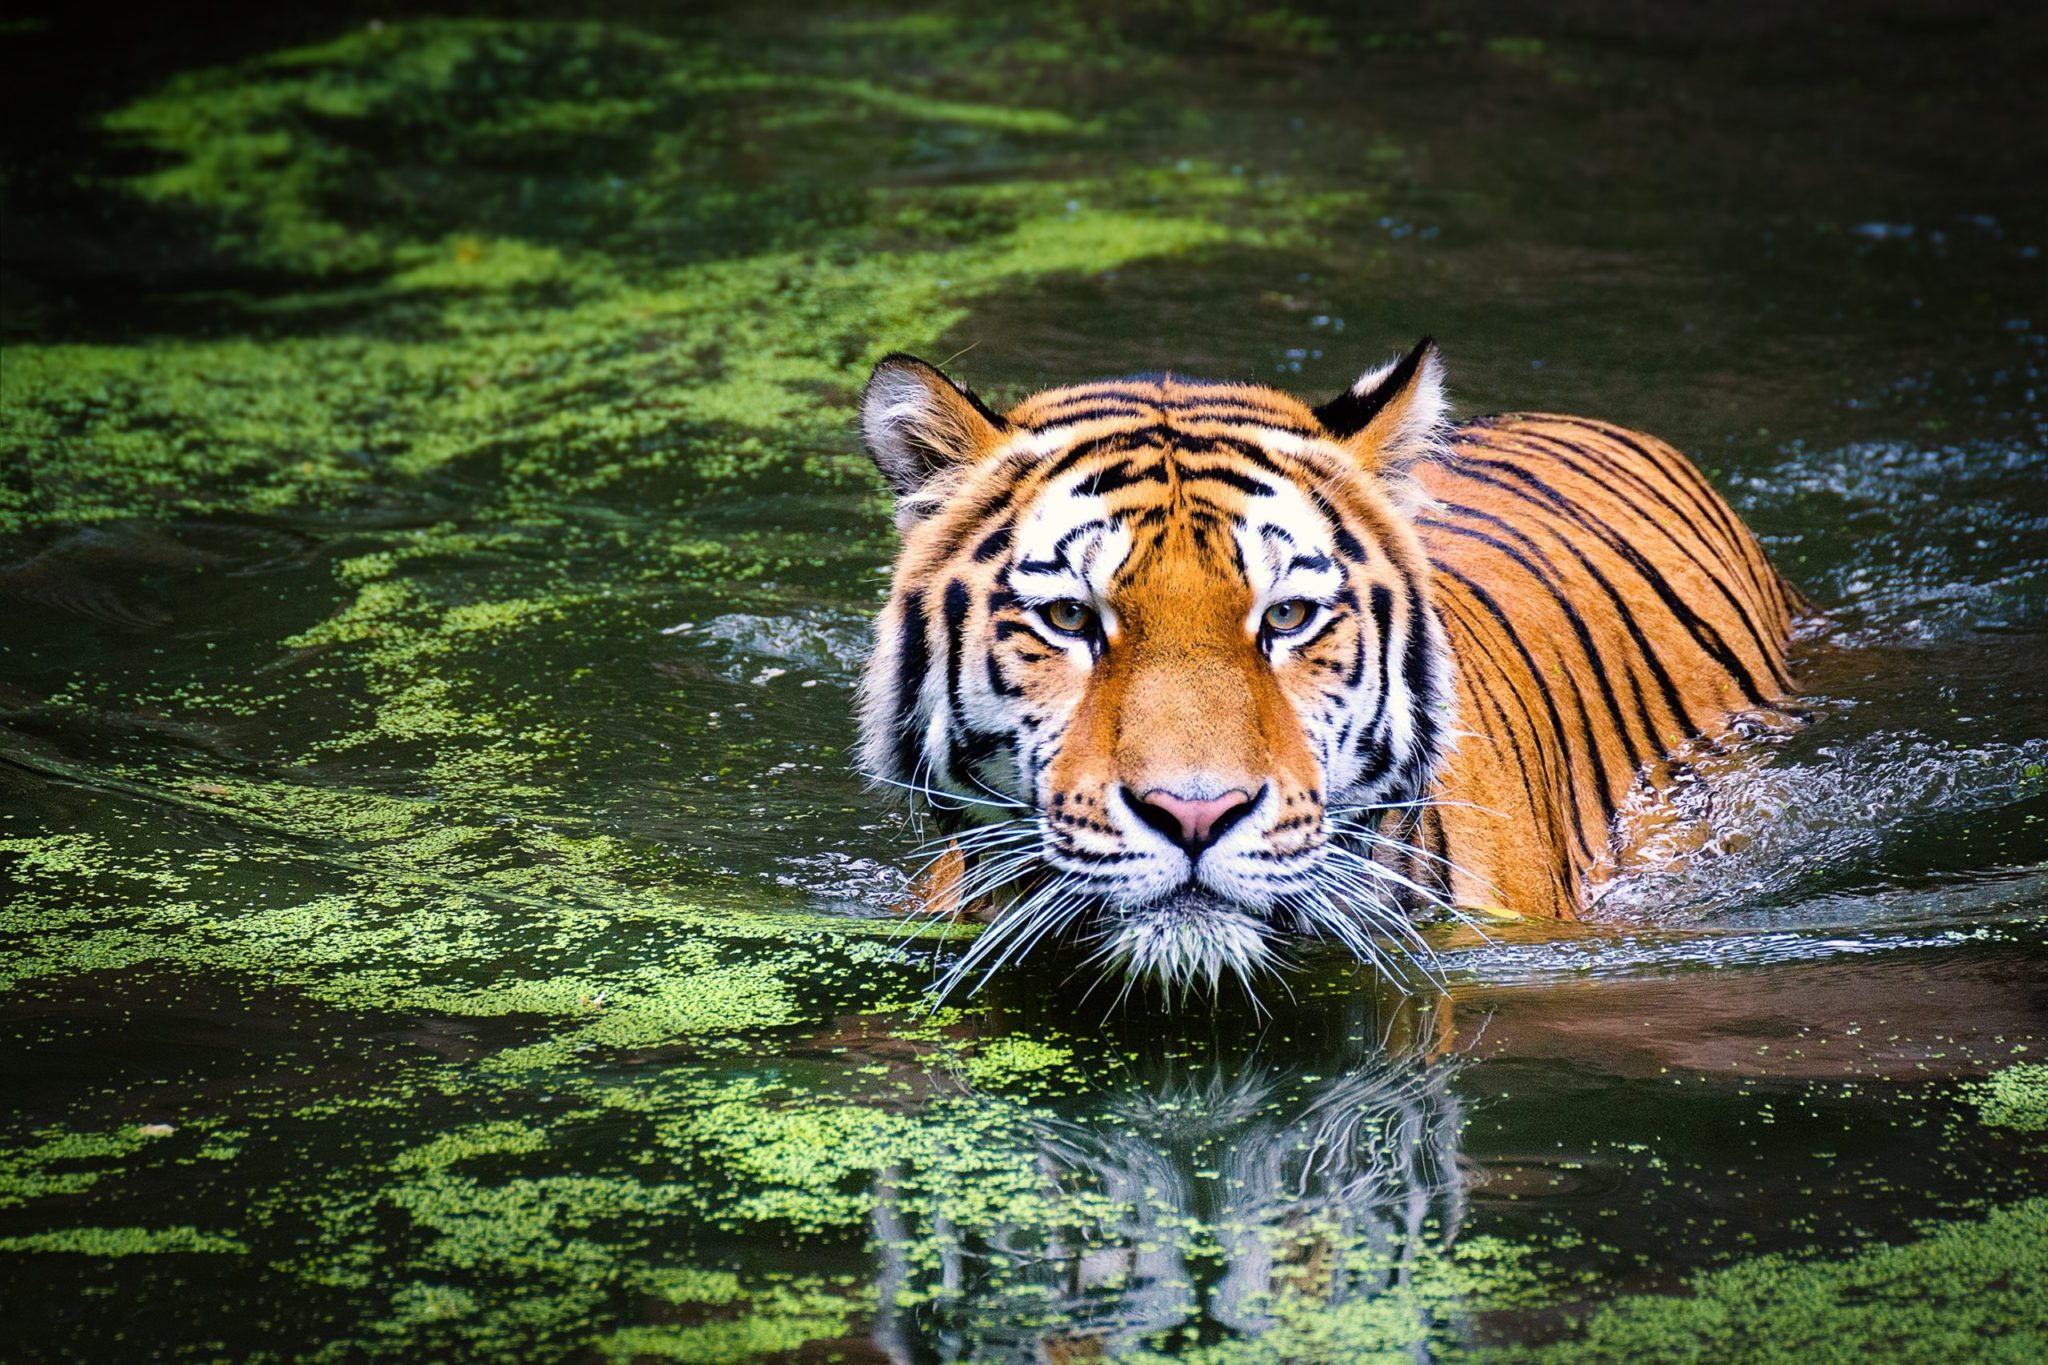 Enchanting-Travels-India-Tours-Tiger-Safaritiger-2535888-1-scaled-1-2048×1365